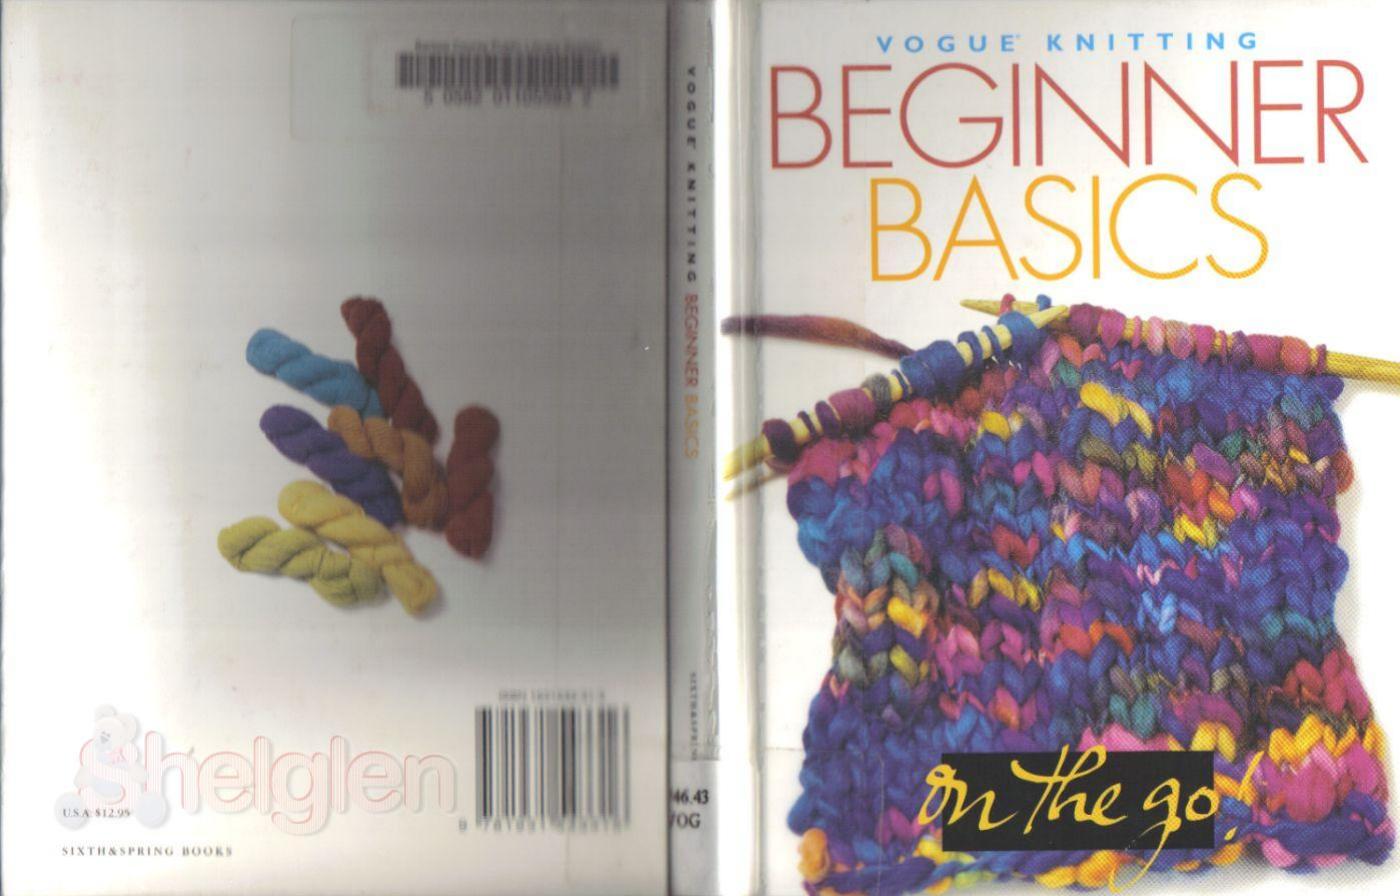 vogue knitting beginner basics by Unknown